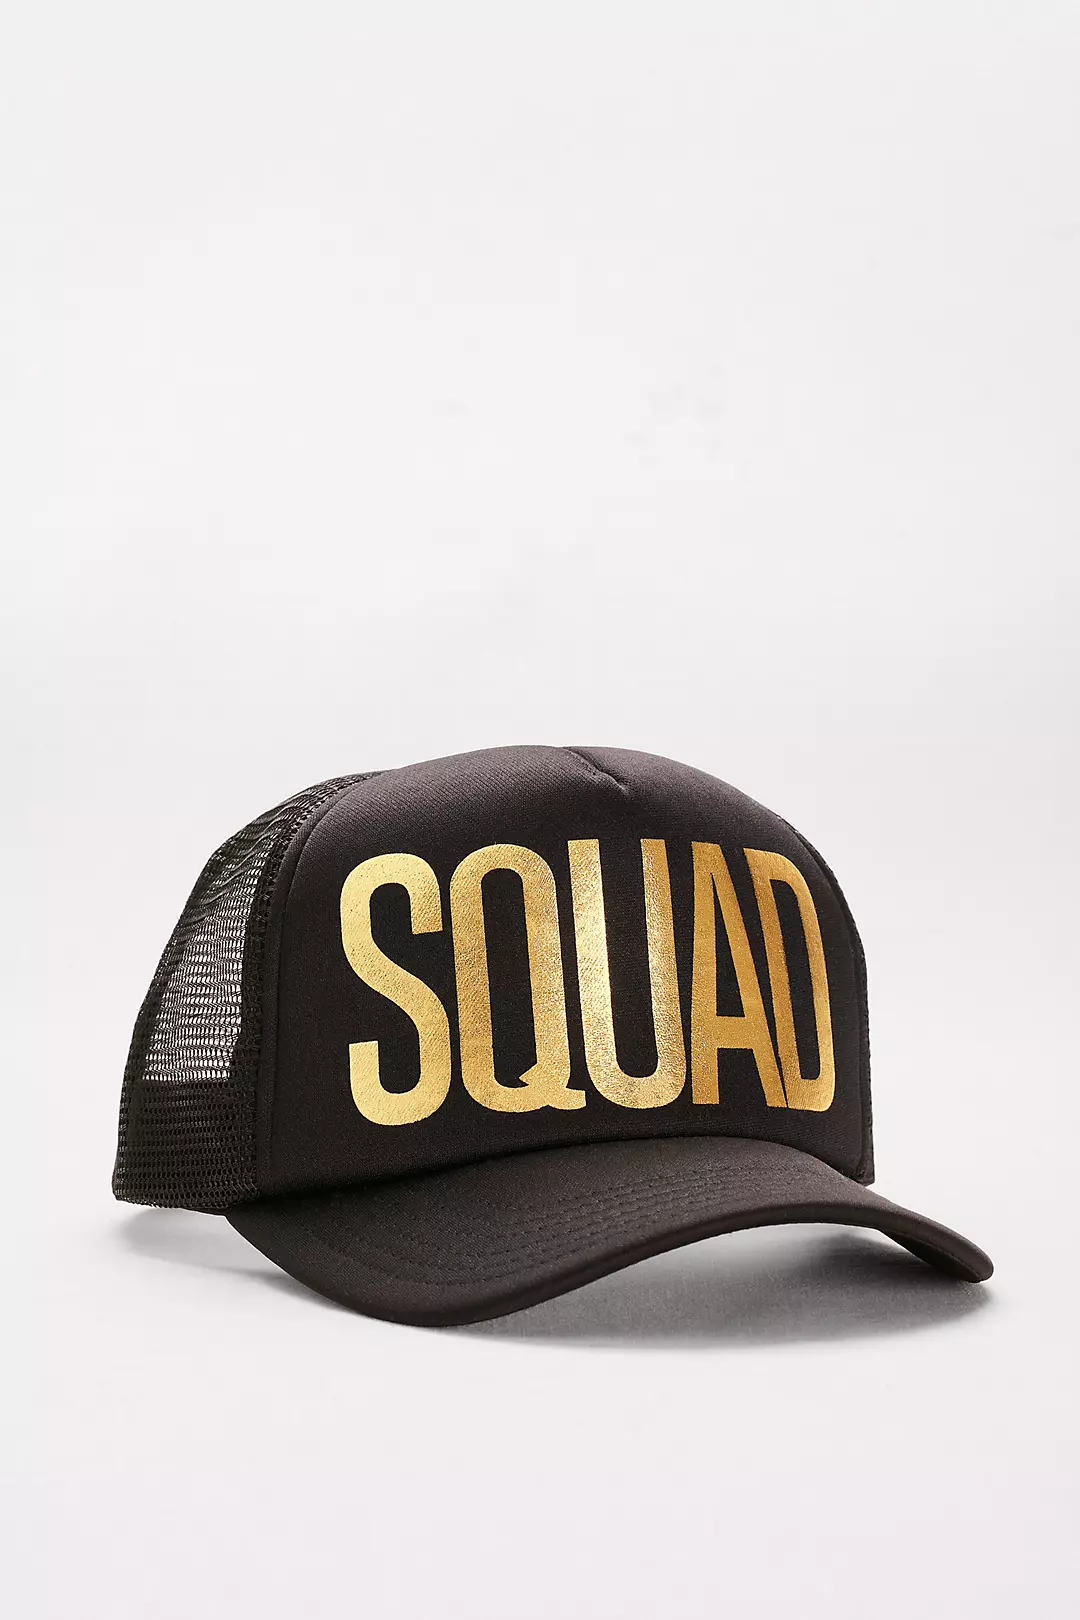 Squad Trucker Hat  Image